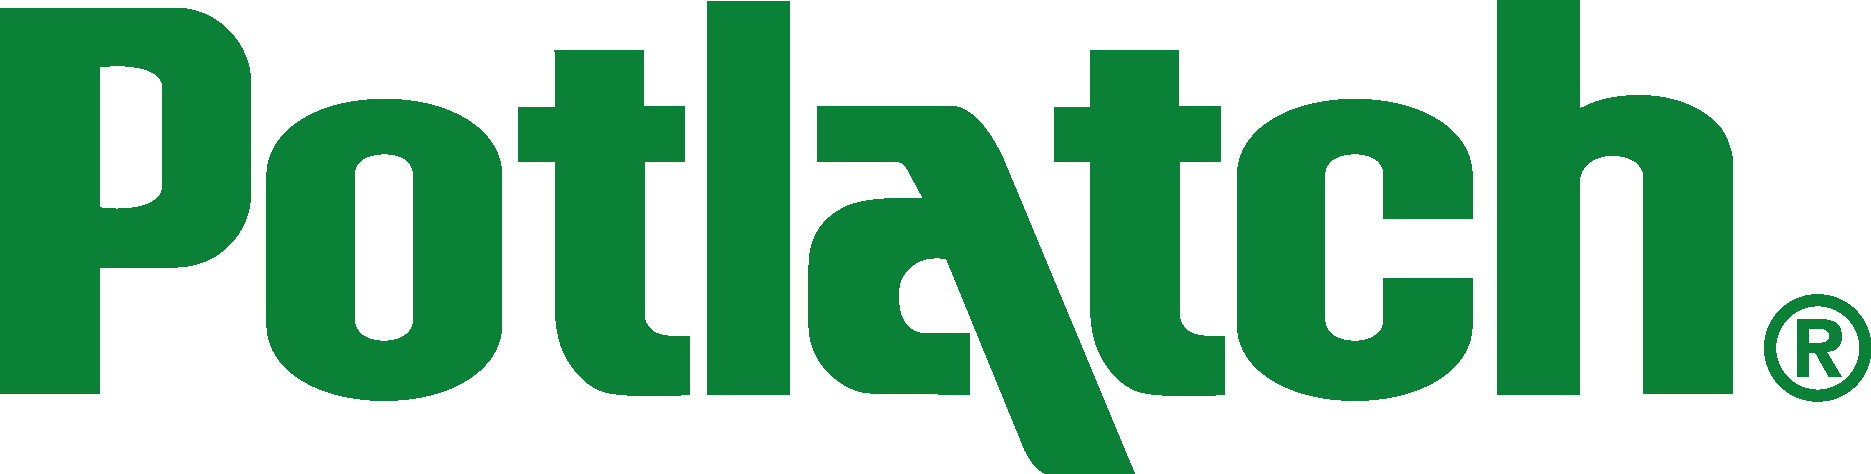 Potlatch Wordmark Logo Vector